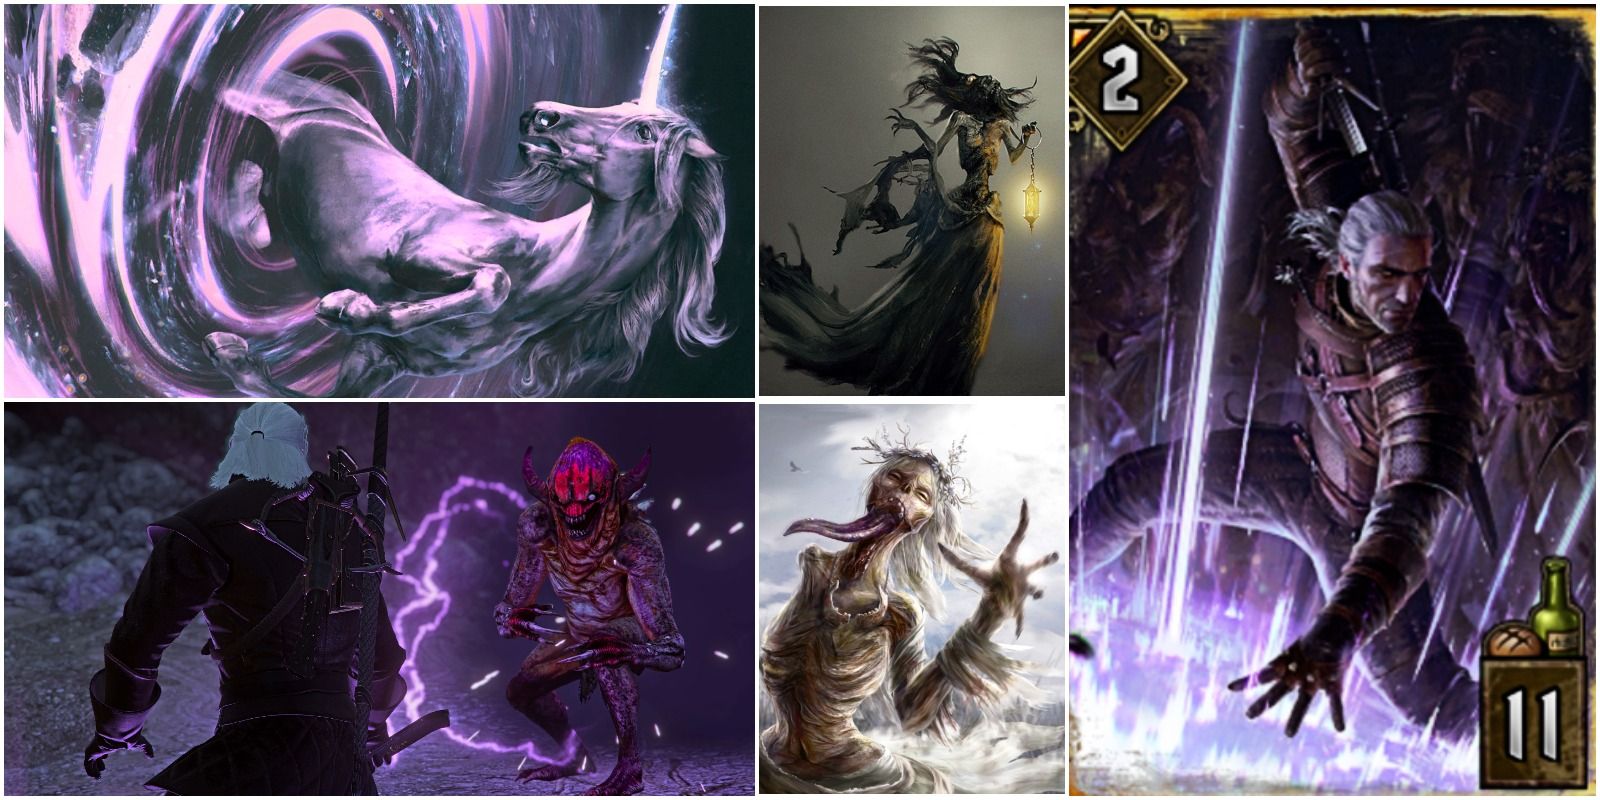 unicorn, geralt casting the purple energy yrden sign, and wraiths